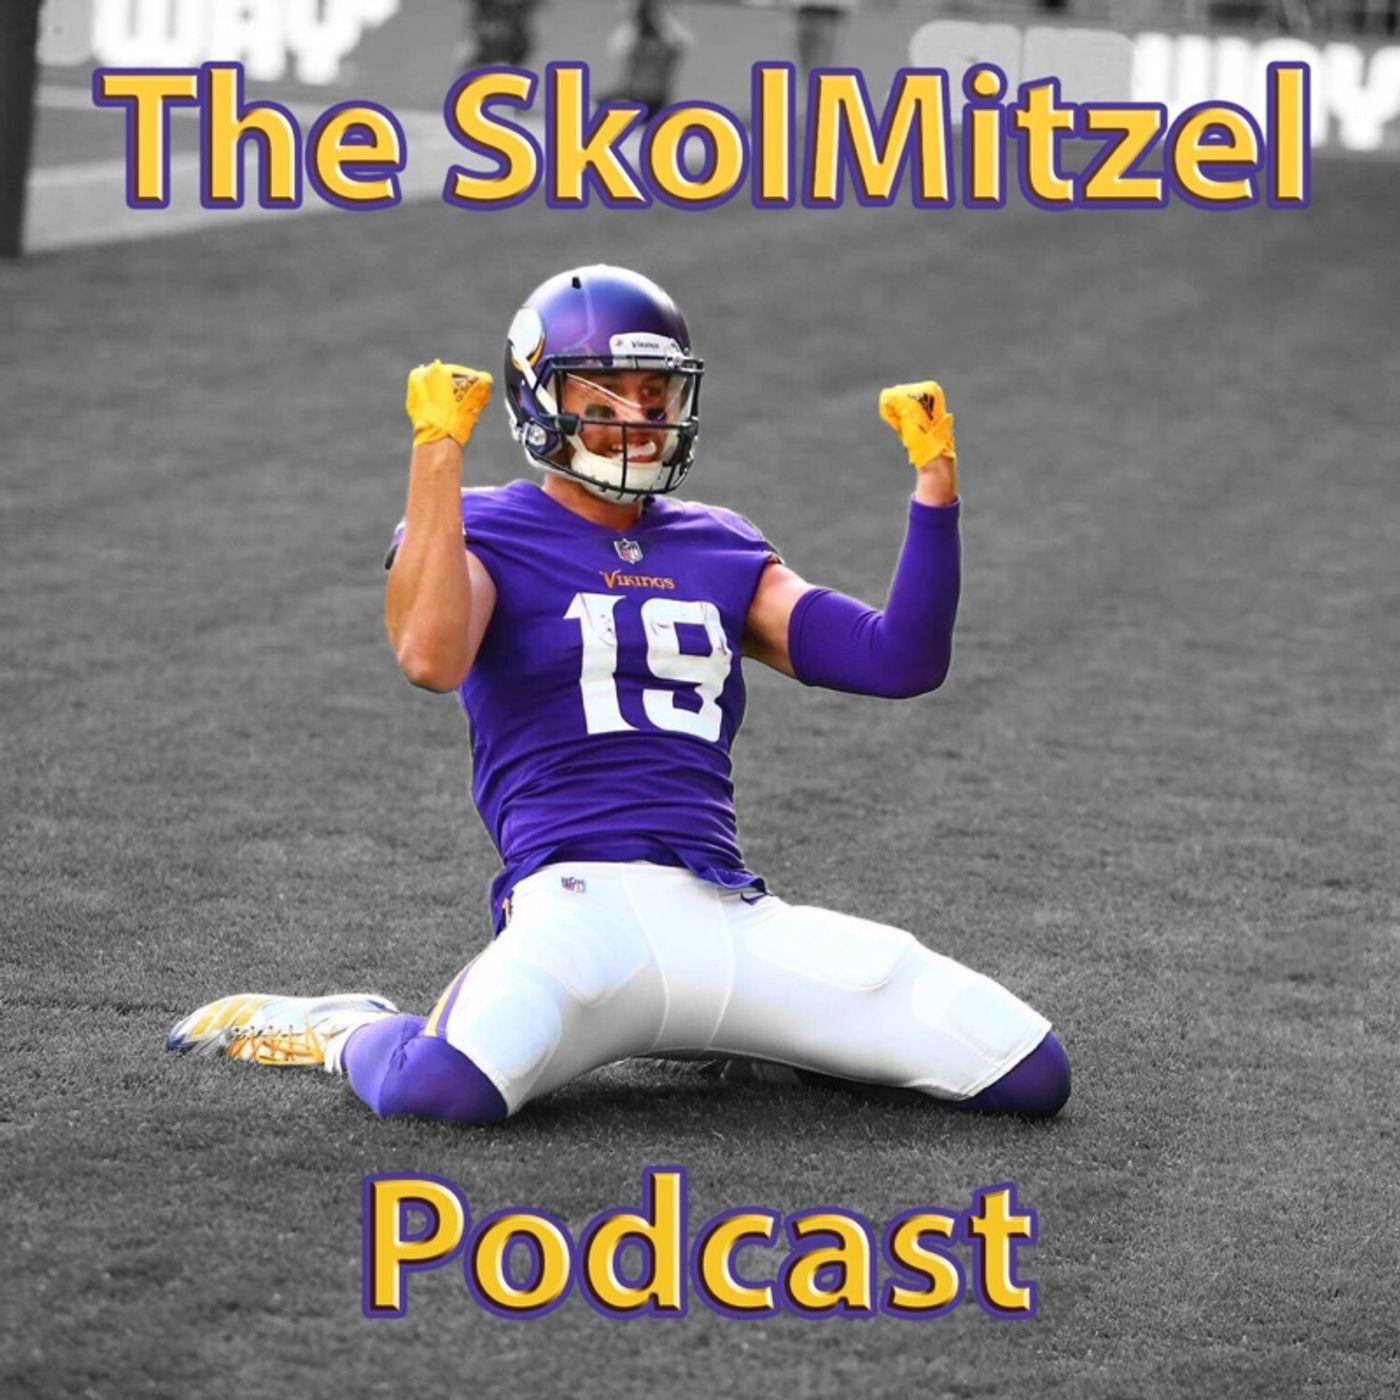 The Skol Mitzel Podcast